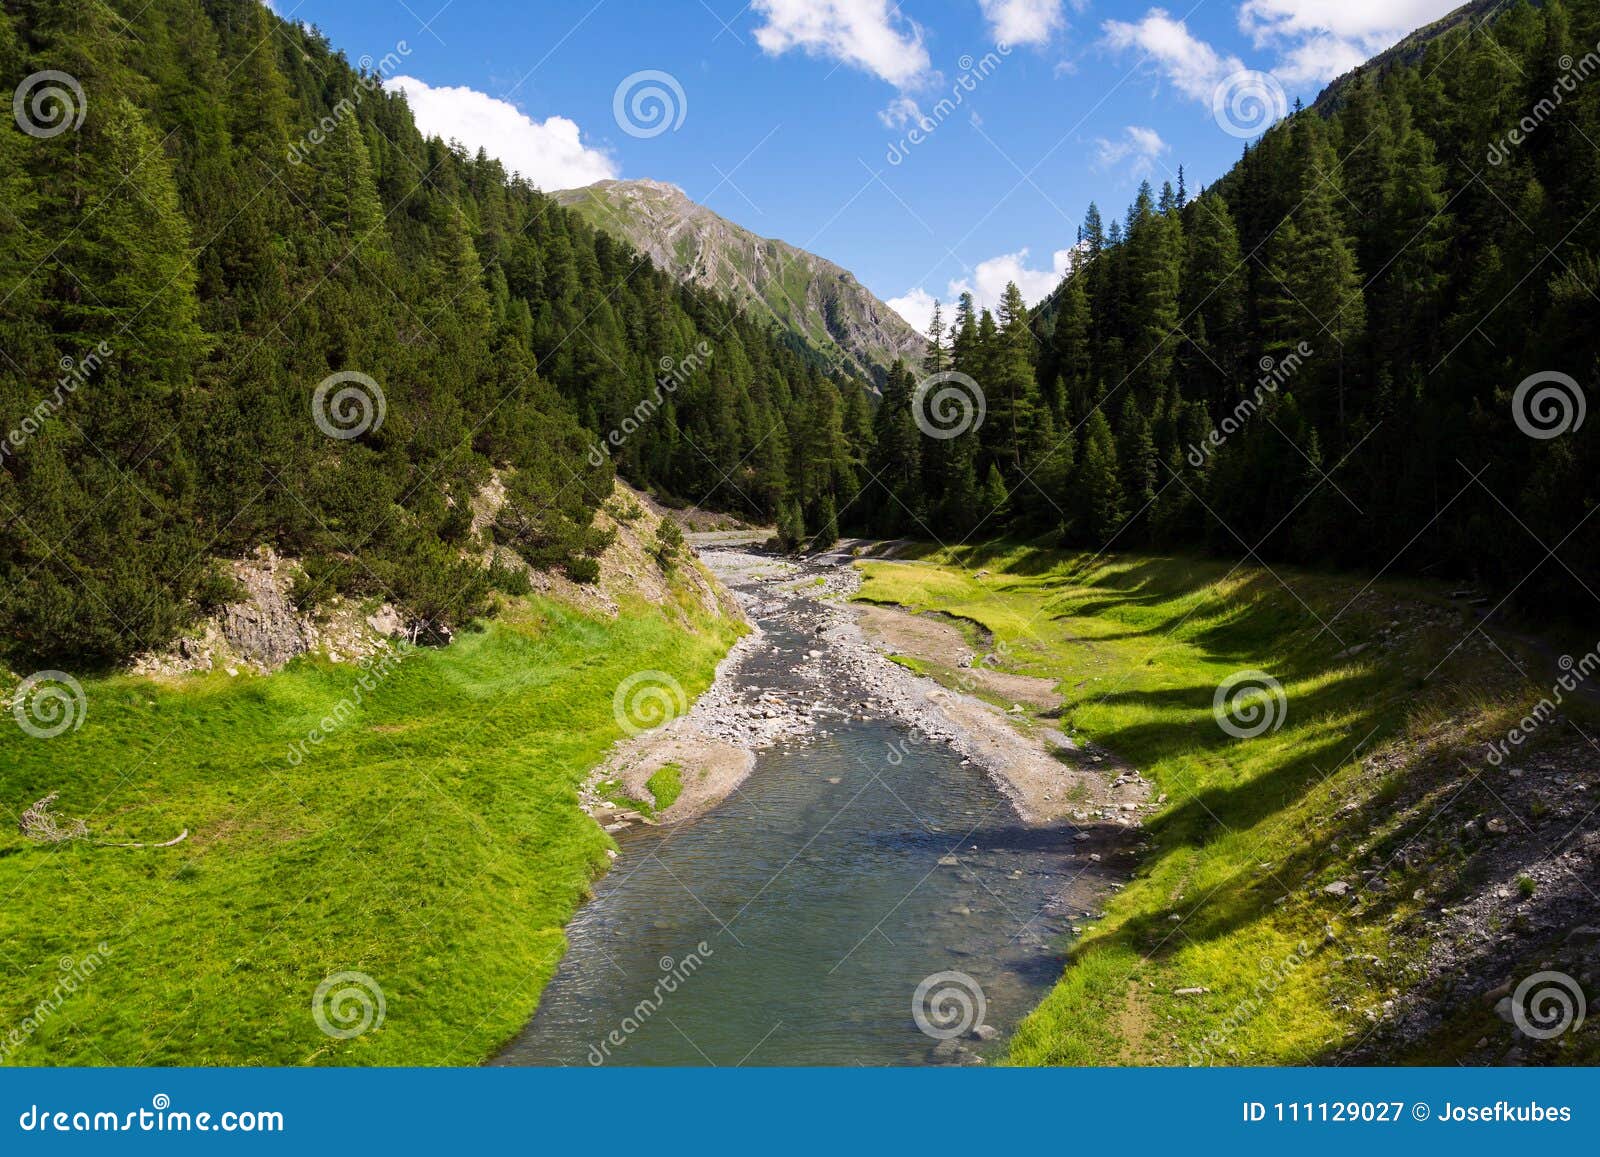 torrente vallaccia flows into lake lago di livigno reservoir, italy